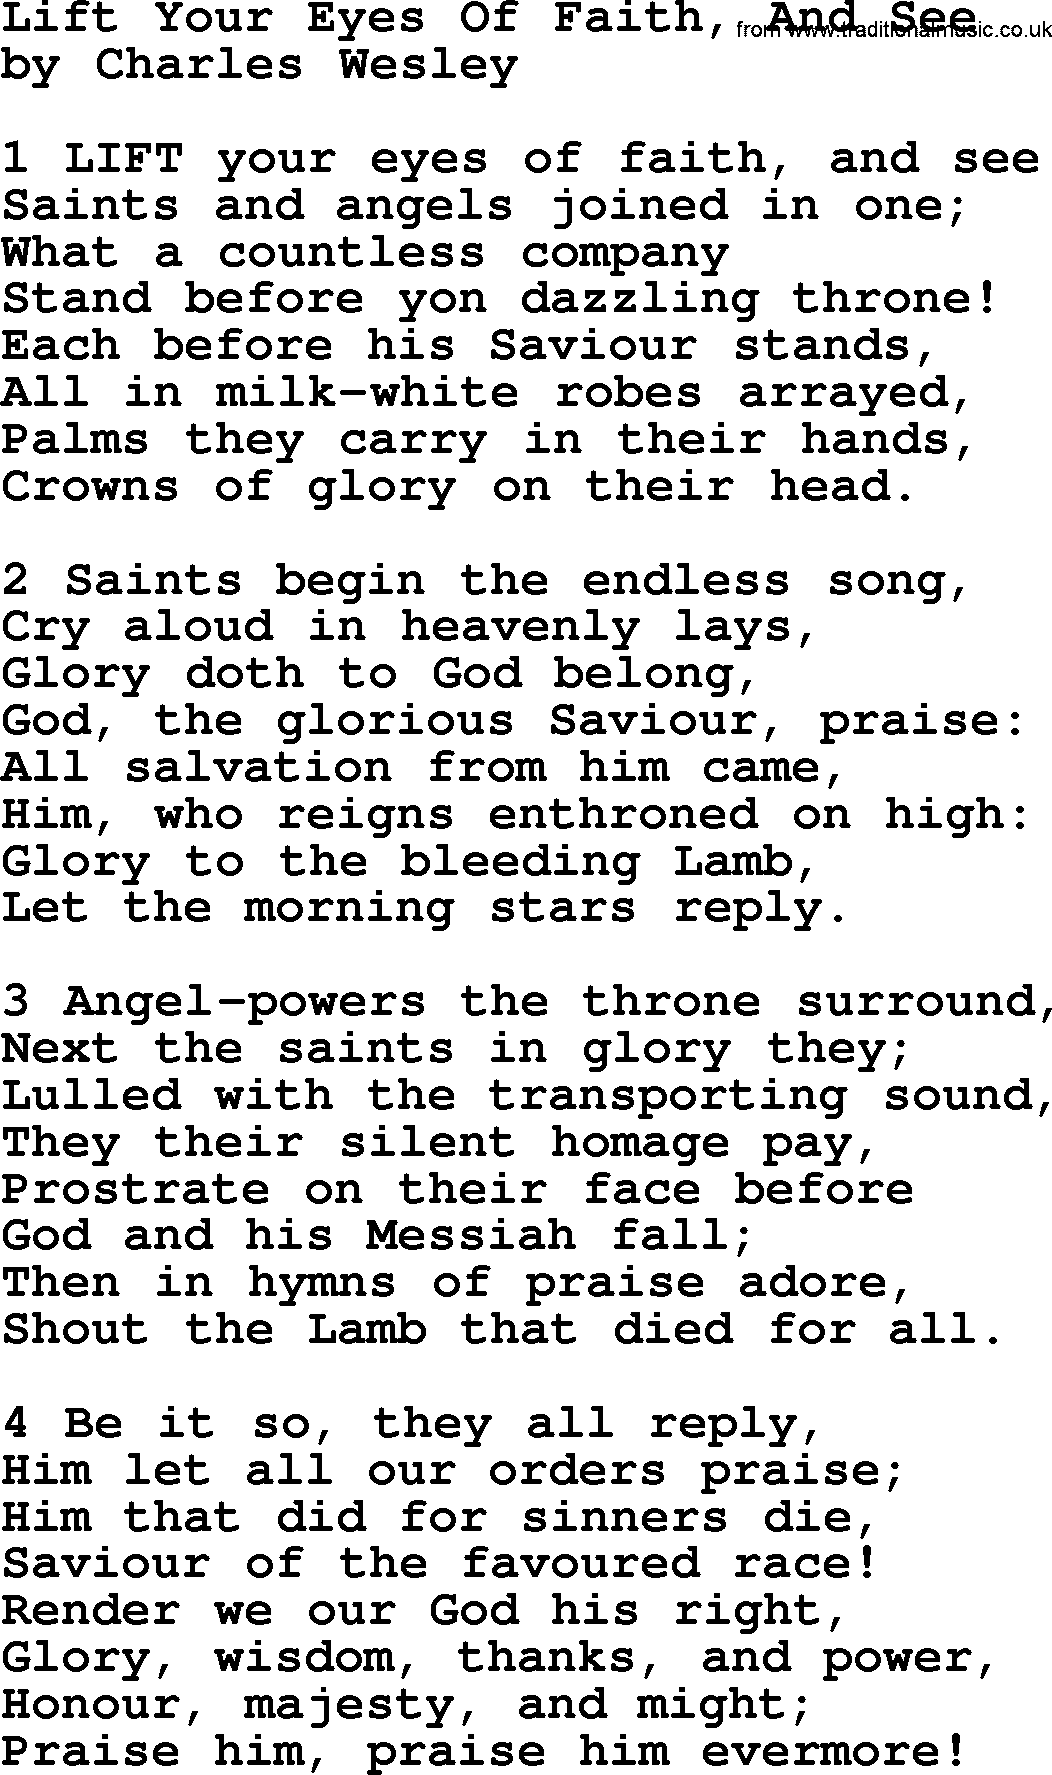 Charles Wesley hymn: Lift Your Eyes Of Faith, And See, lyrics